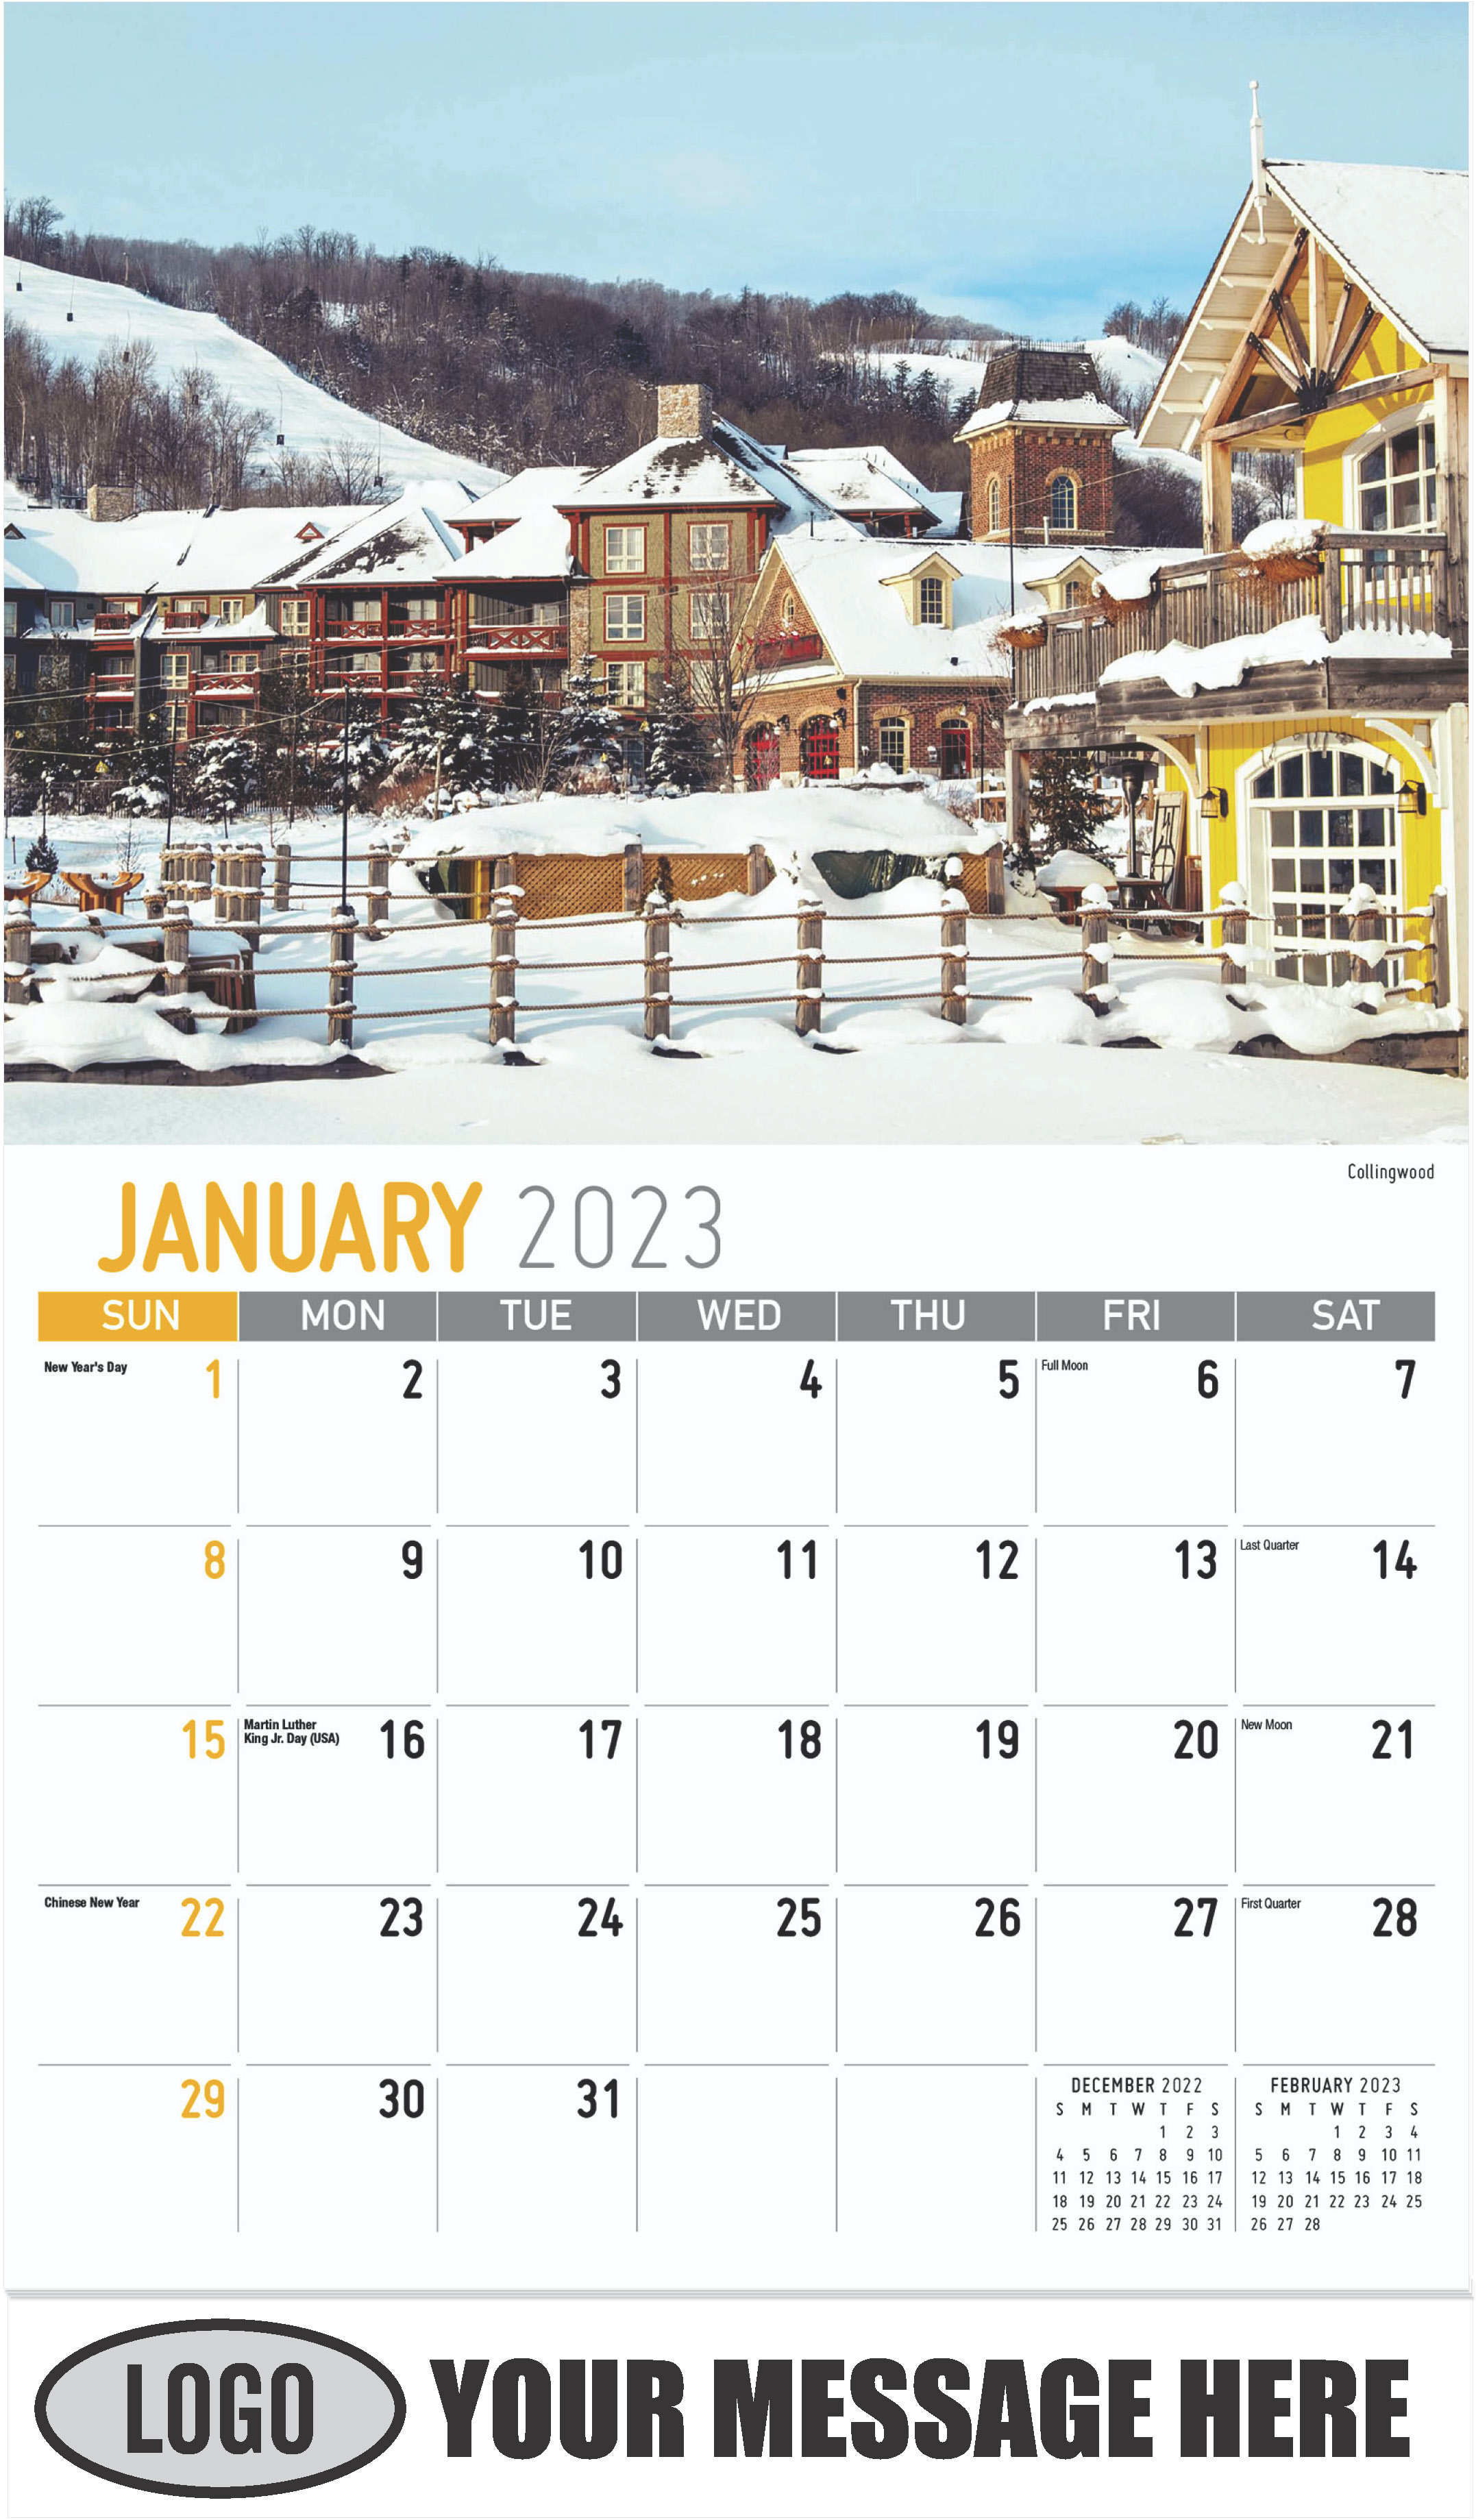 Collingwood - January - Scenes of Ontario 2023 Promotional Calendar